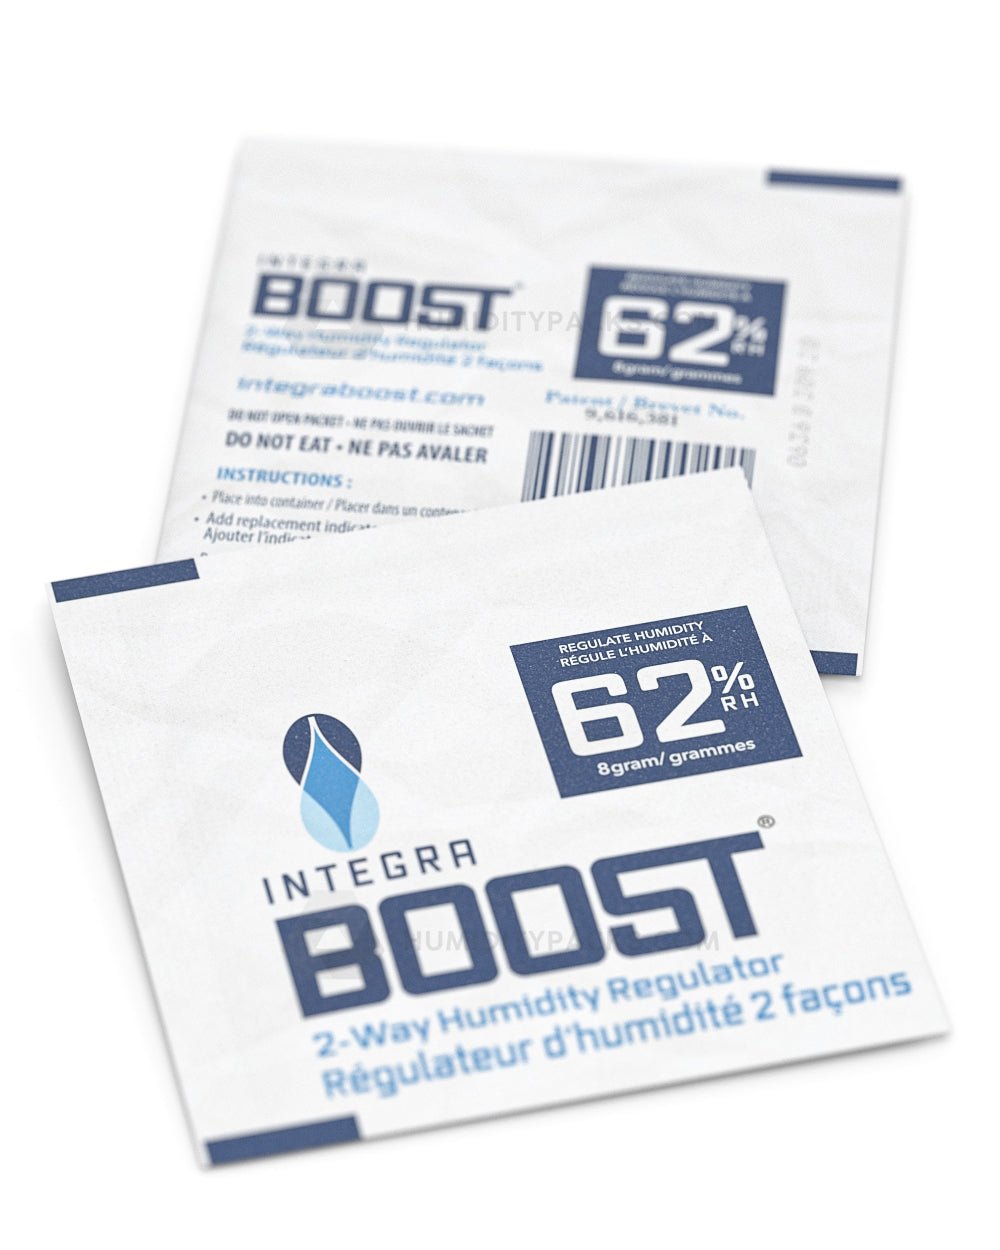 Integra Boost Humidity Packs 62% (8 gram) 50-Box Humidity Packs - 8